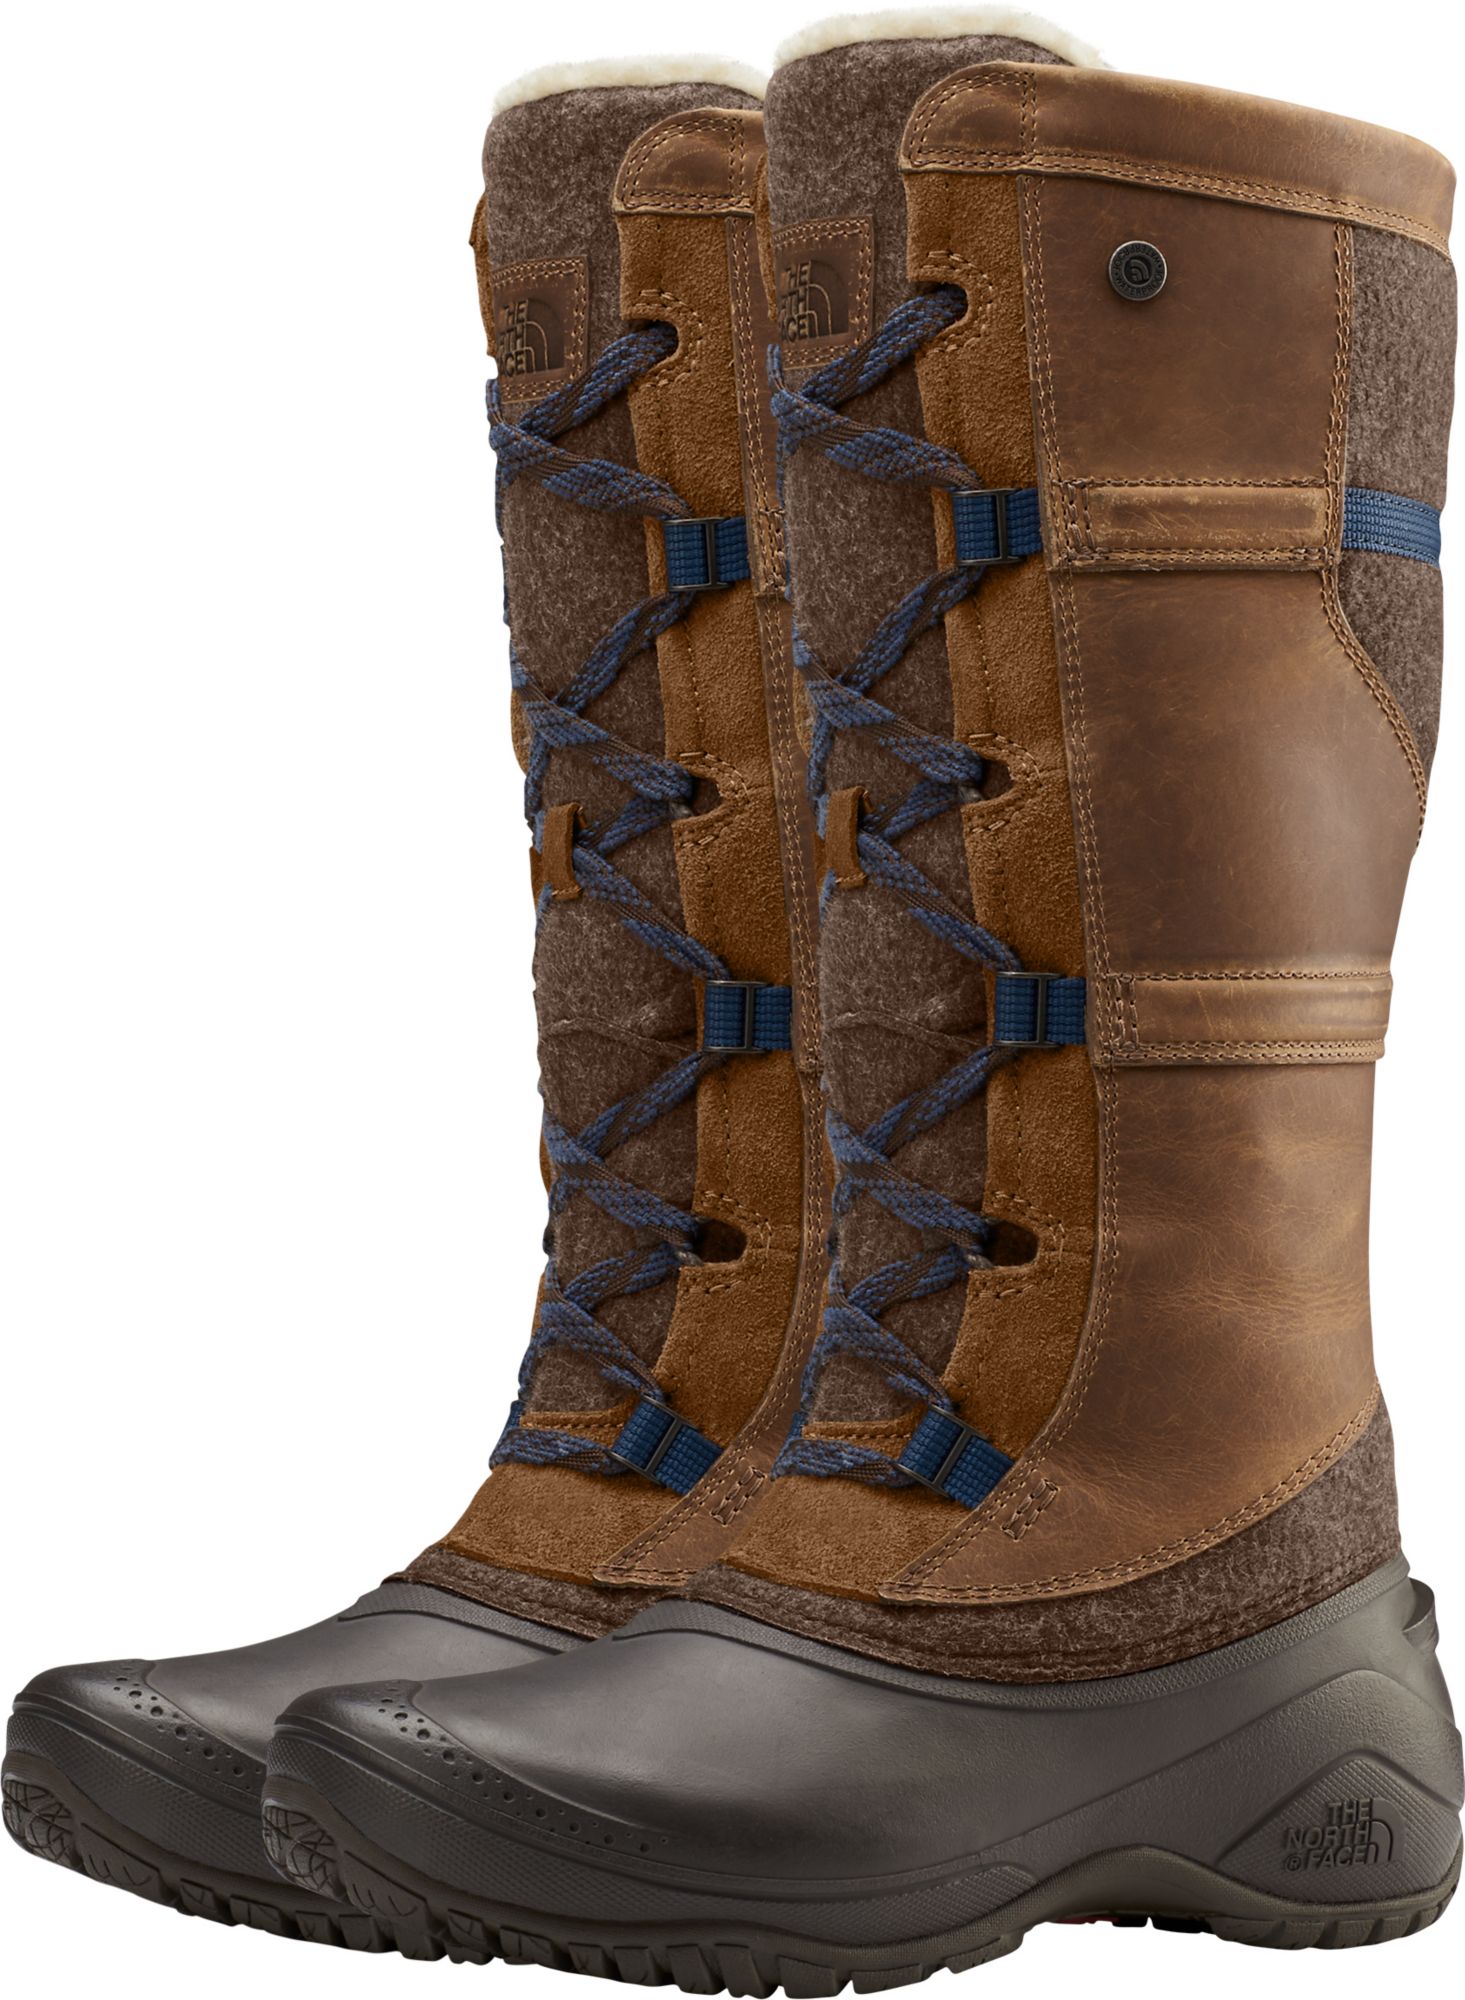 women's shellista iii tall winter boots